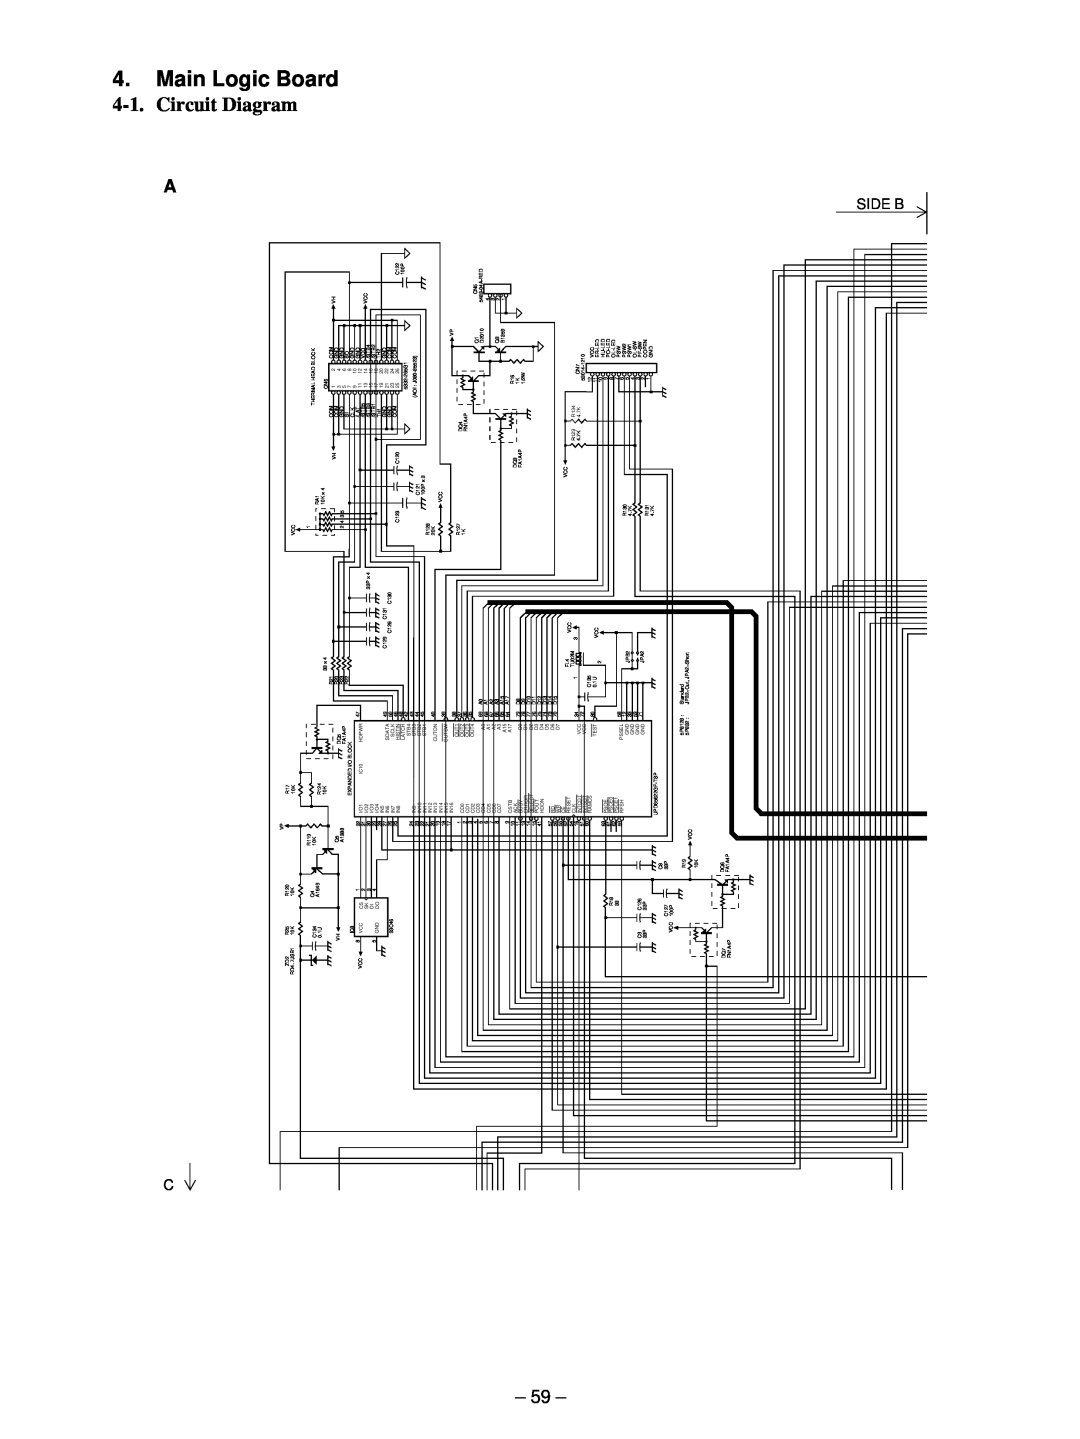 Star Micronics TSP400 technical manual Main Logic Board, Circuit Diagram 